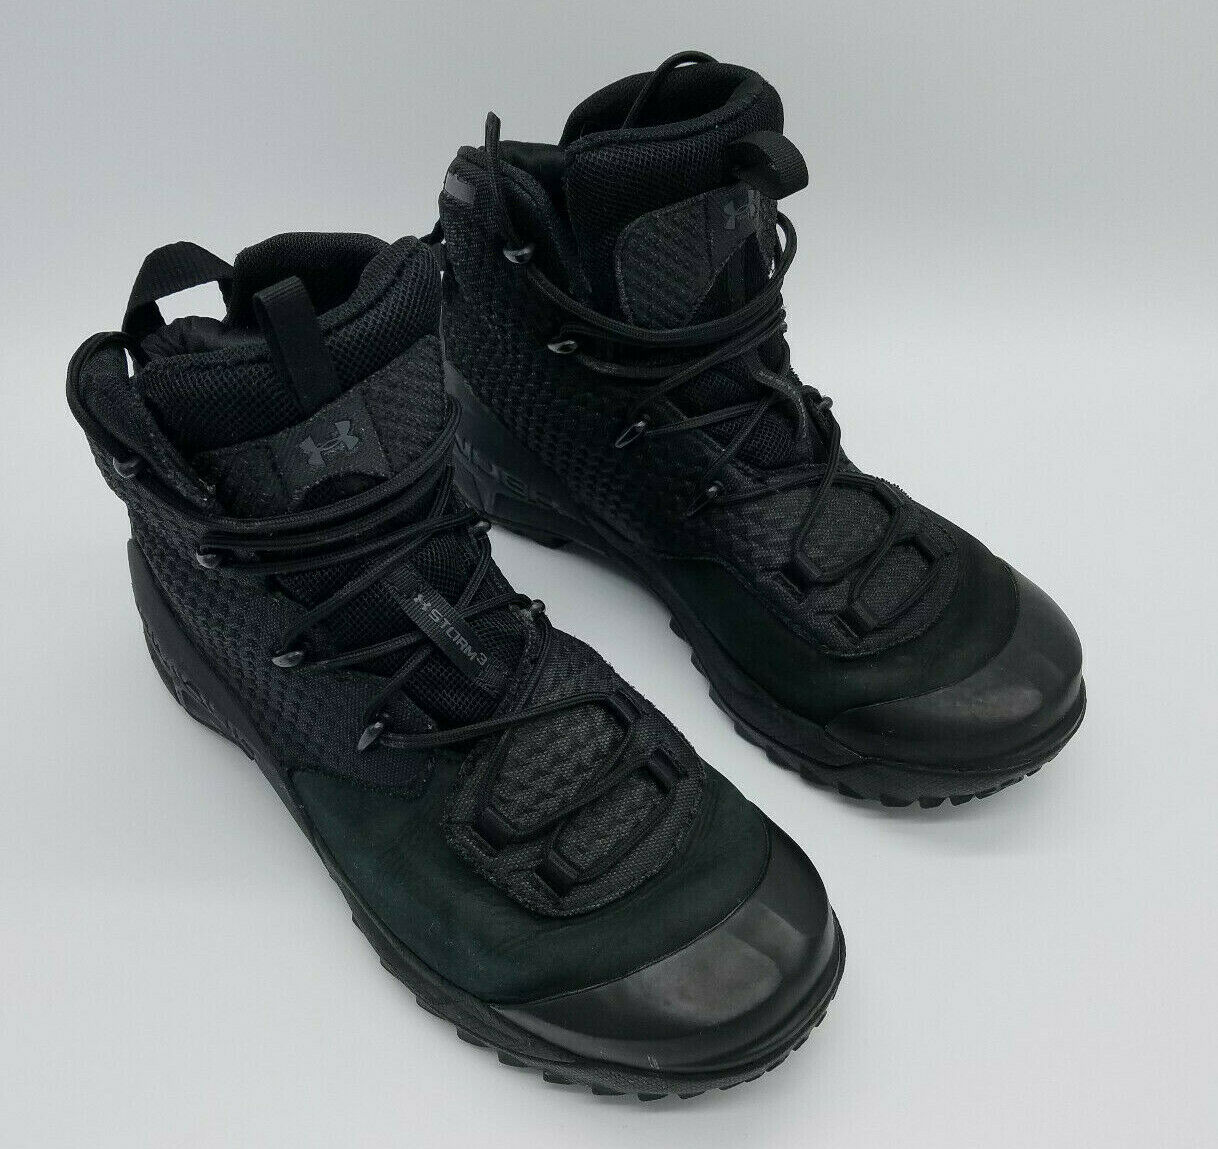 Under Armour INFIL HIKE GTX Men's Tactical Boots 1276598 002 Size 9.5